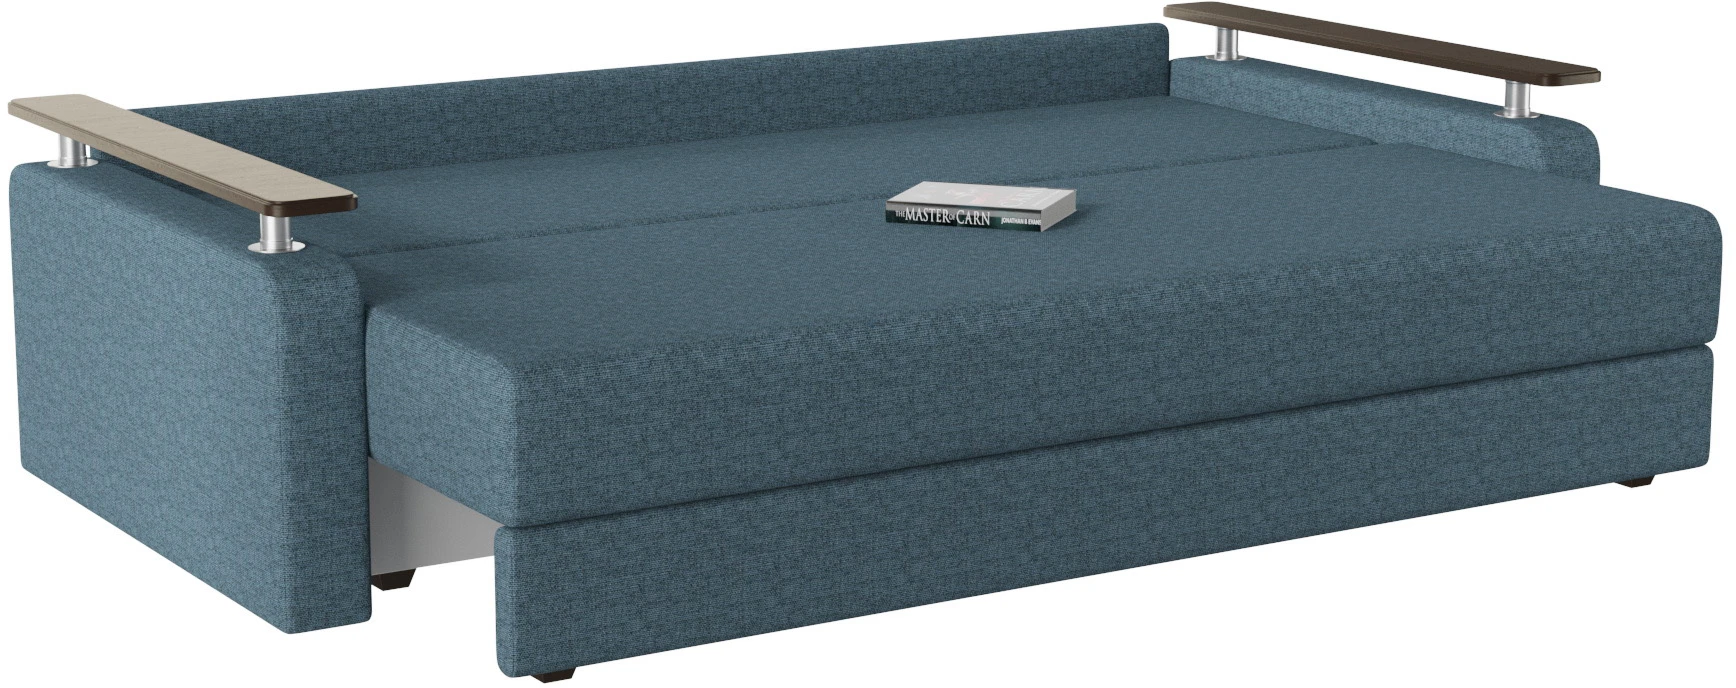 диван еврокнижка с подушками и подлокотниками